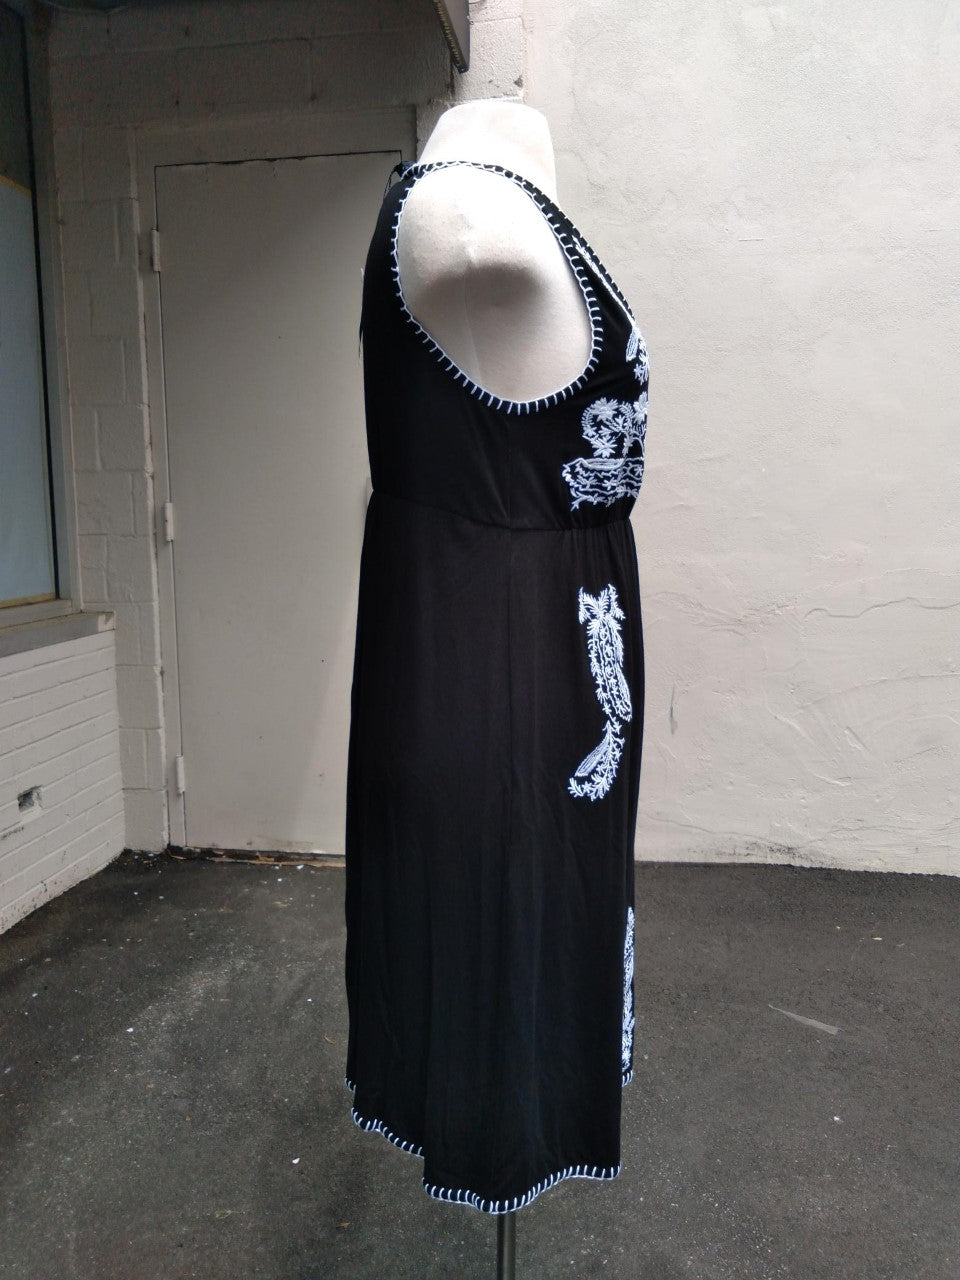 NWT - Grace Elements black white Sleeveless Dress - L